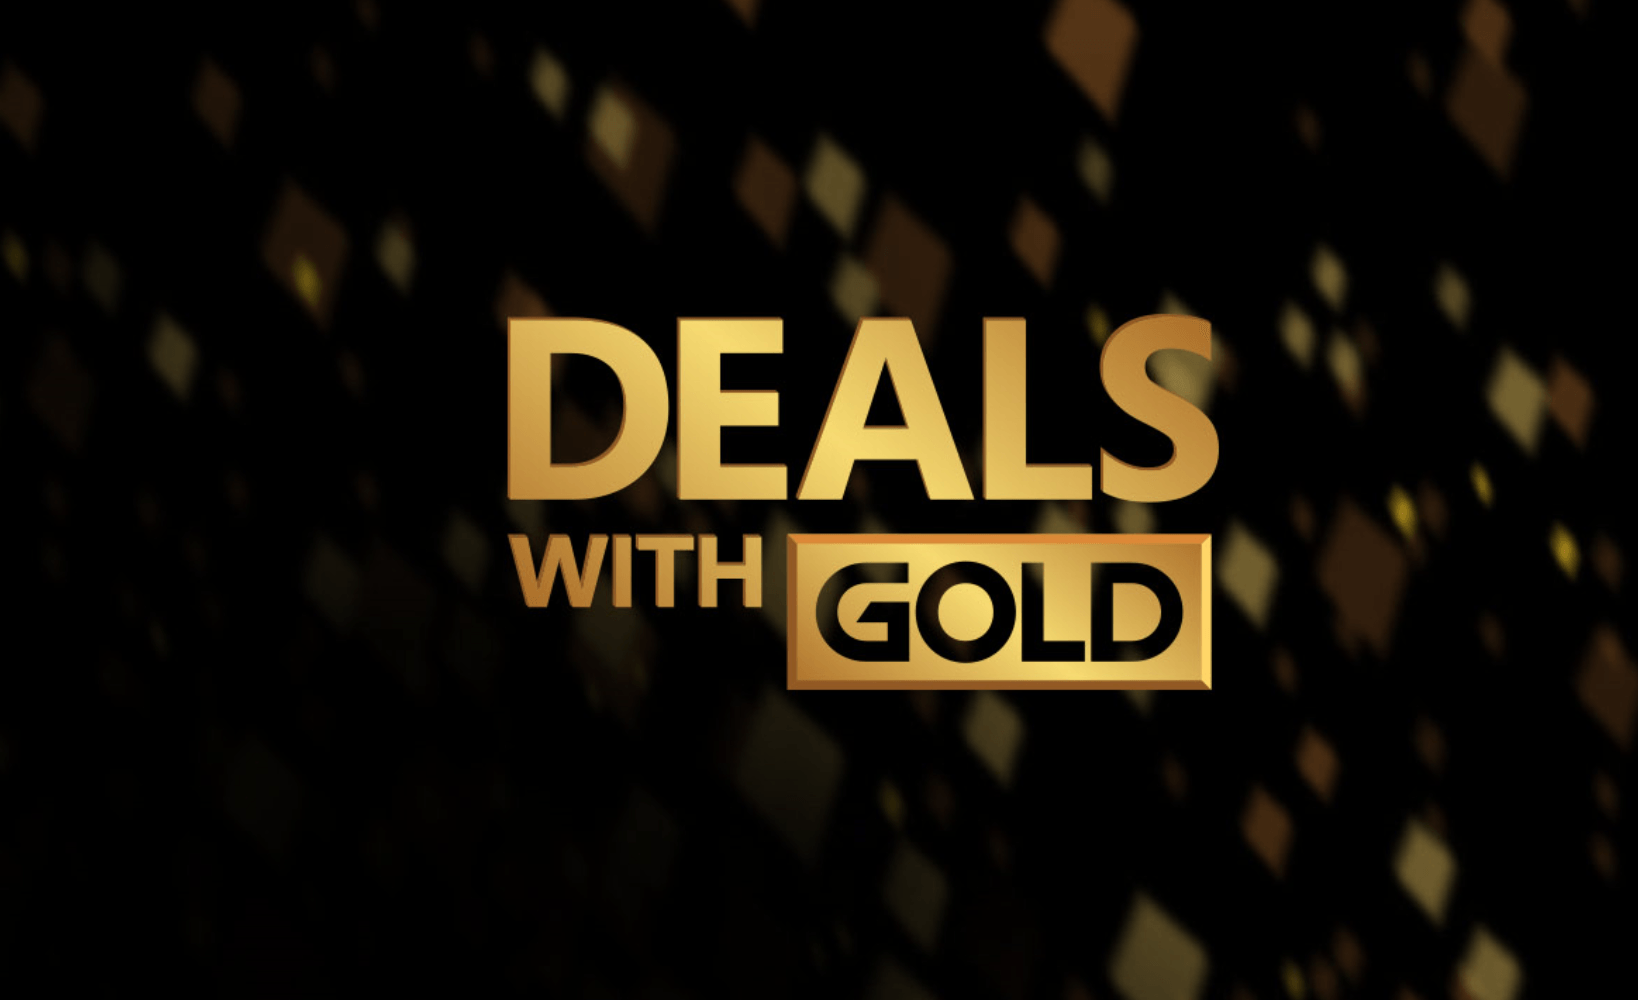 Deals with Gold - Injustice 2, Elite Dangerous & Street Fighter IV